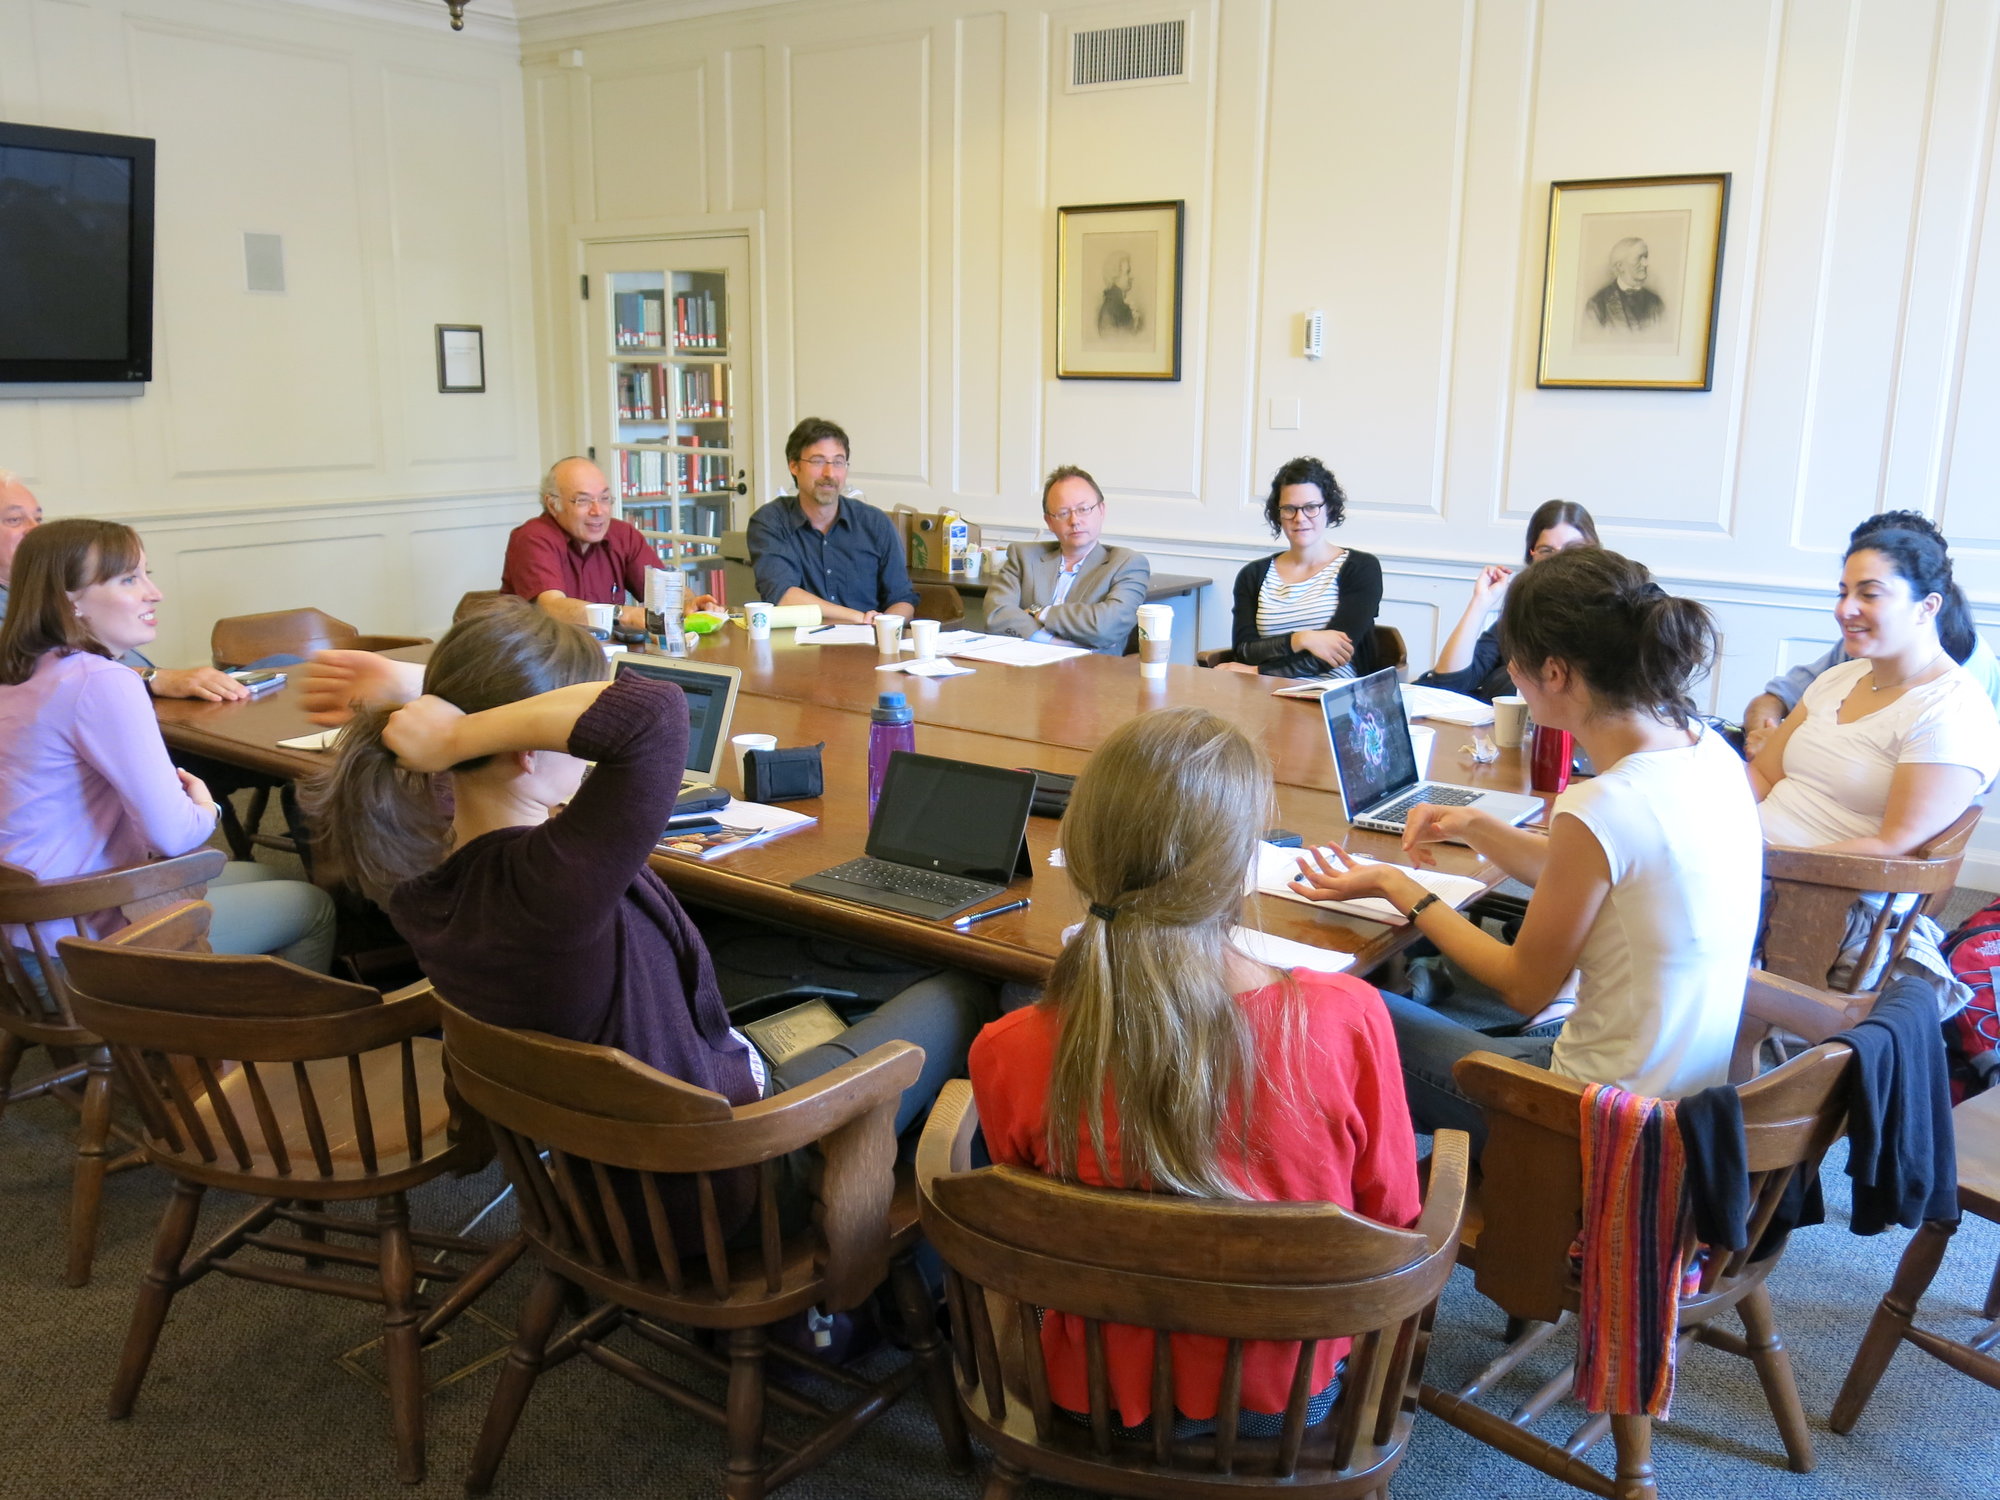 Workshop participants and discussants critique a PhD candidate's dissertation research.